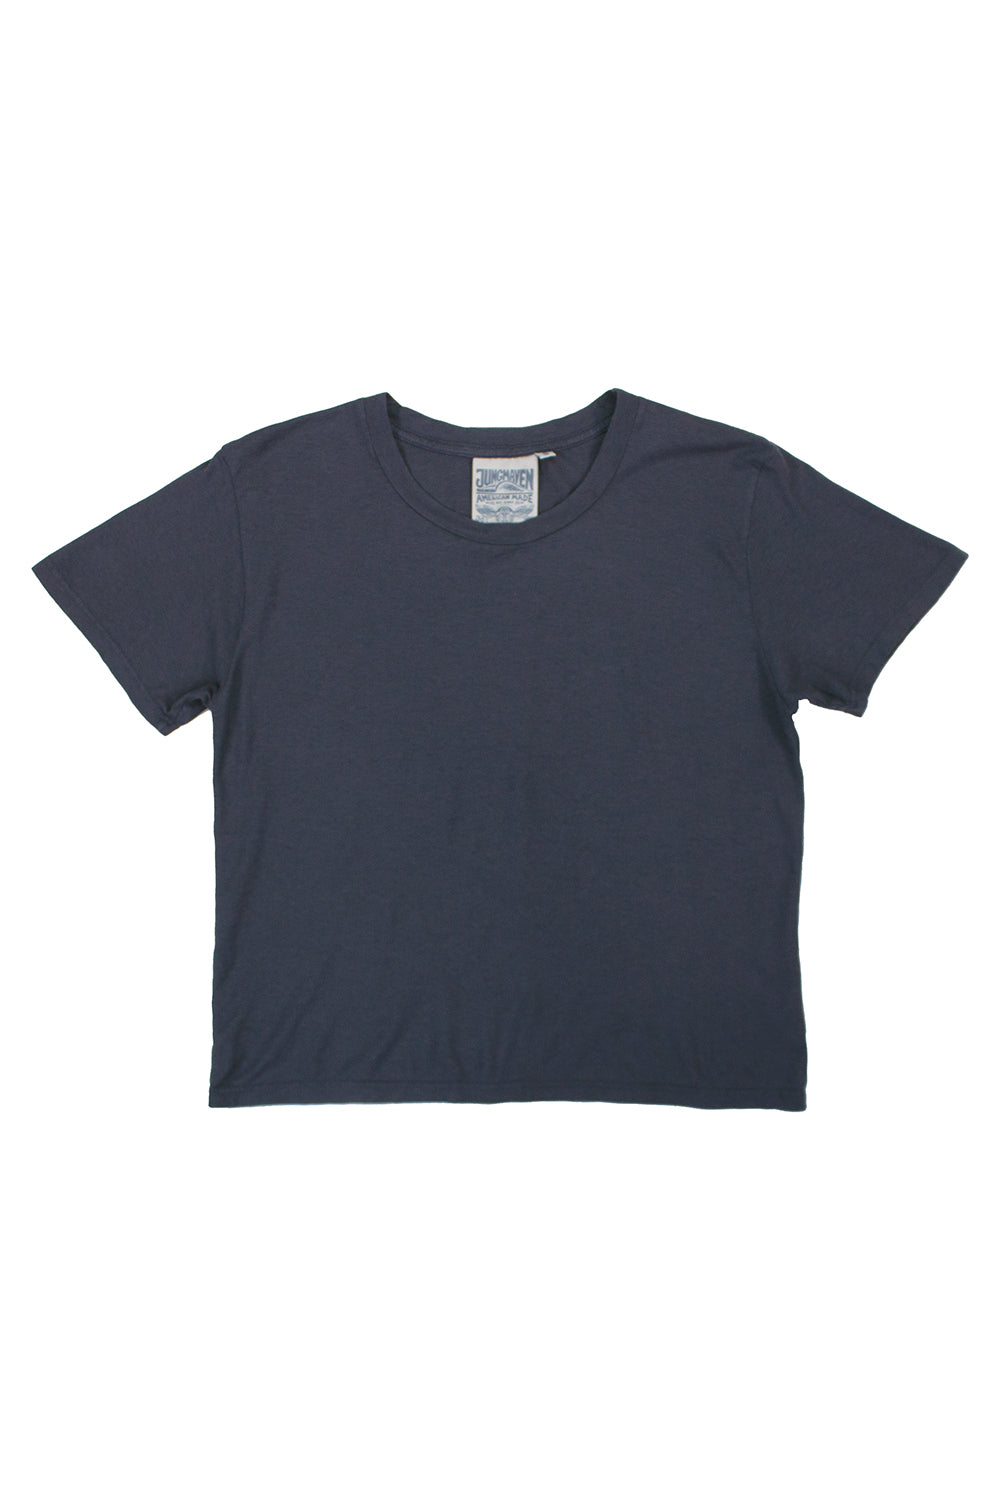 Cropped Ojai Tee | Jungmaven Hemp Clothing & Accessories / Color: Diesel Gray